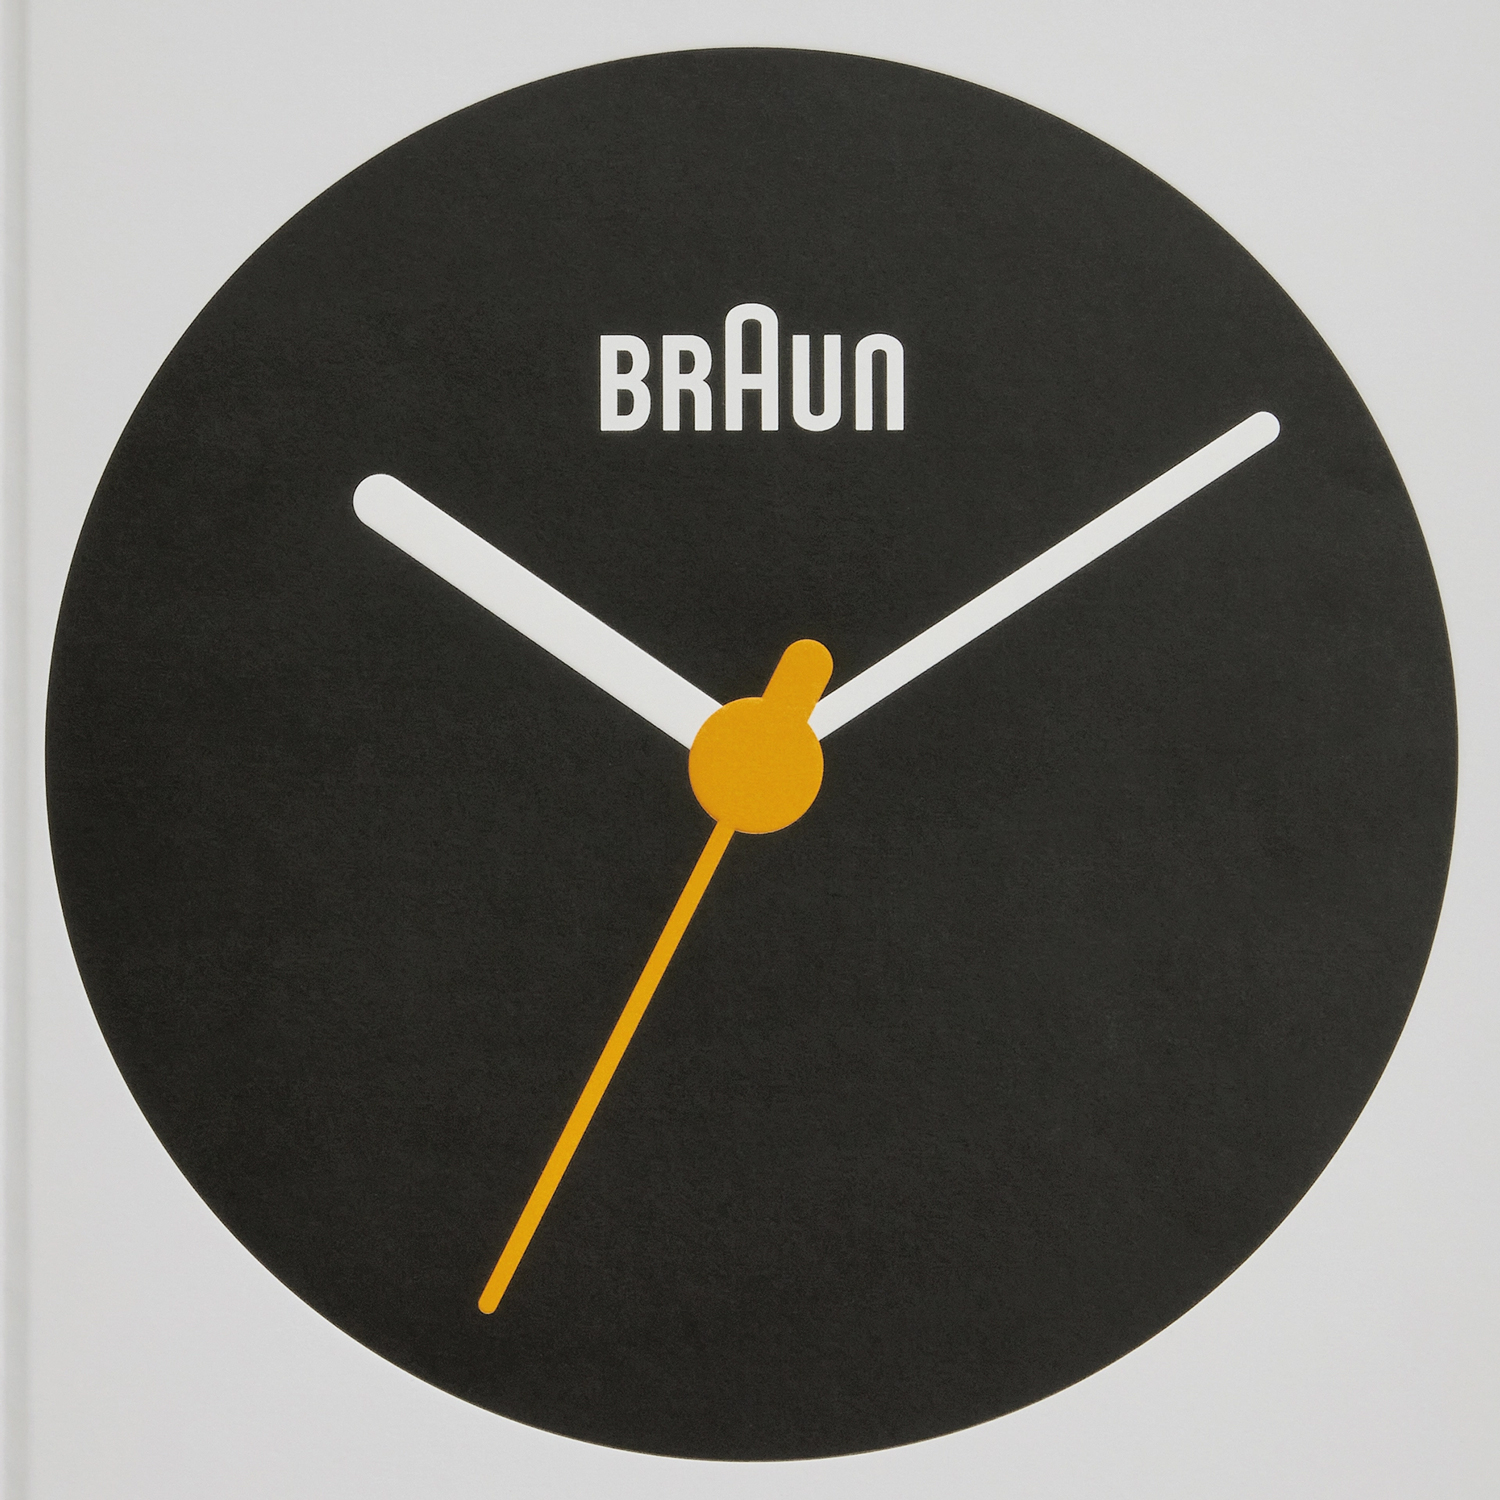 Imagen de Braun: Diseñado para perdurar